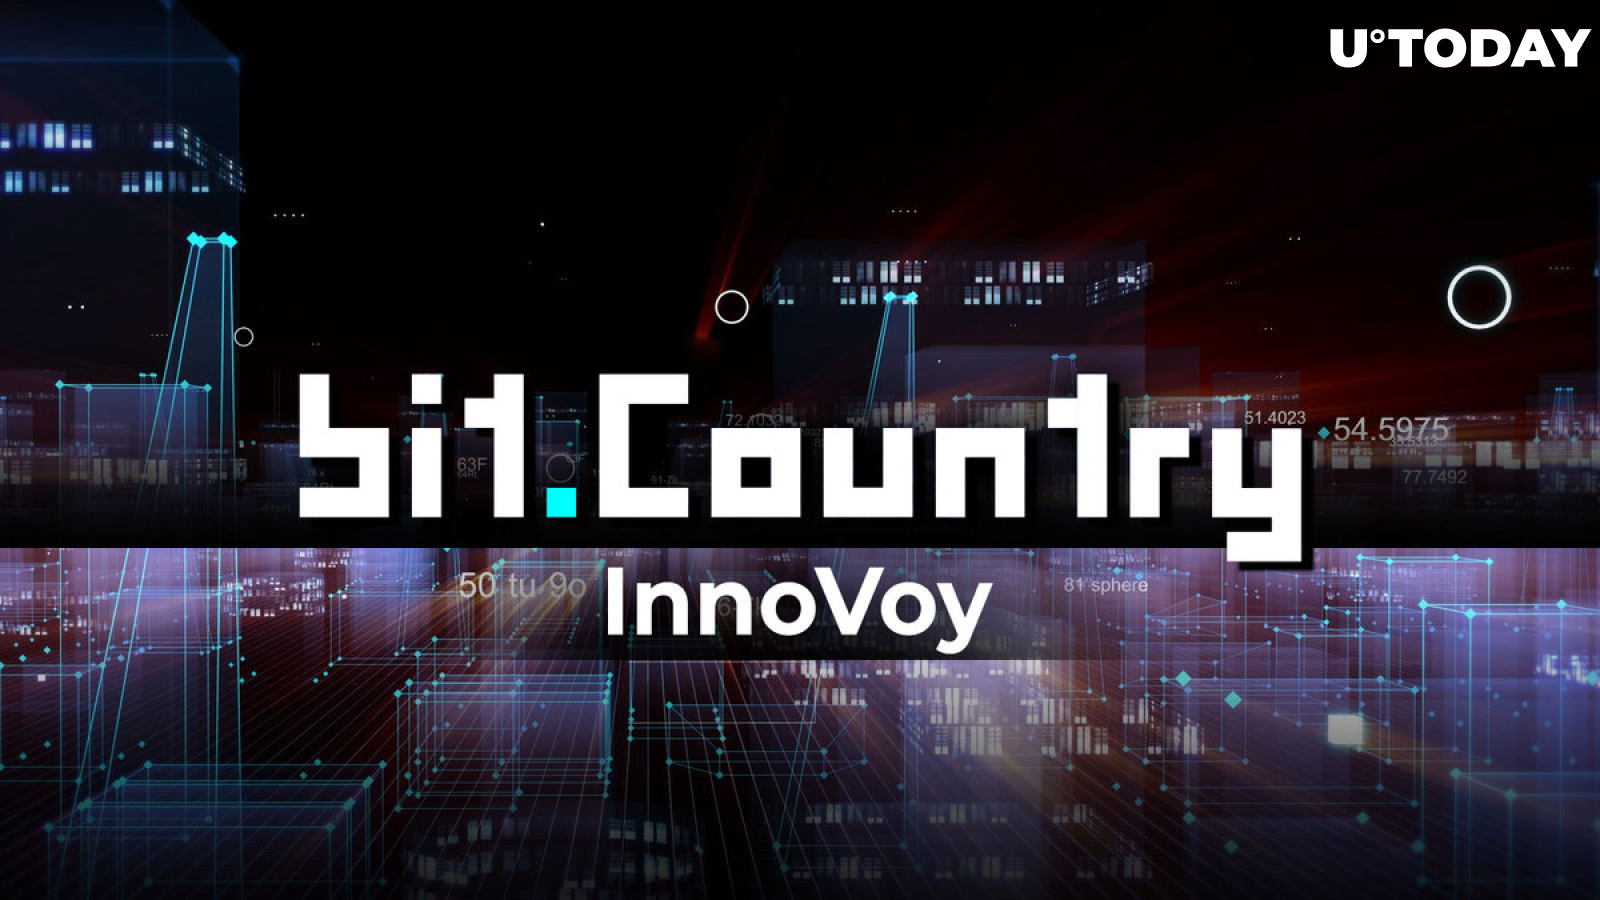 Polkadot's BitCountry Announces InnoVoy Event: Details